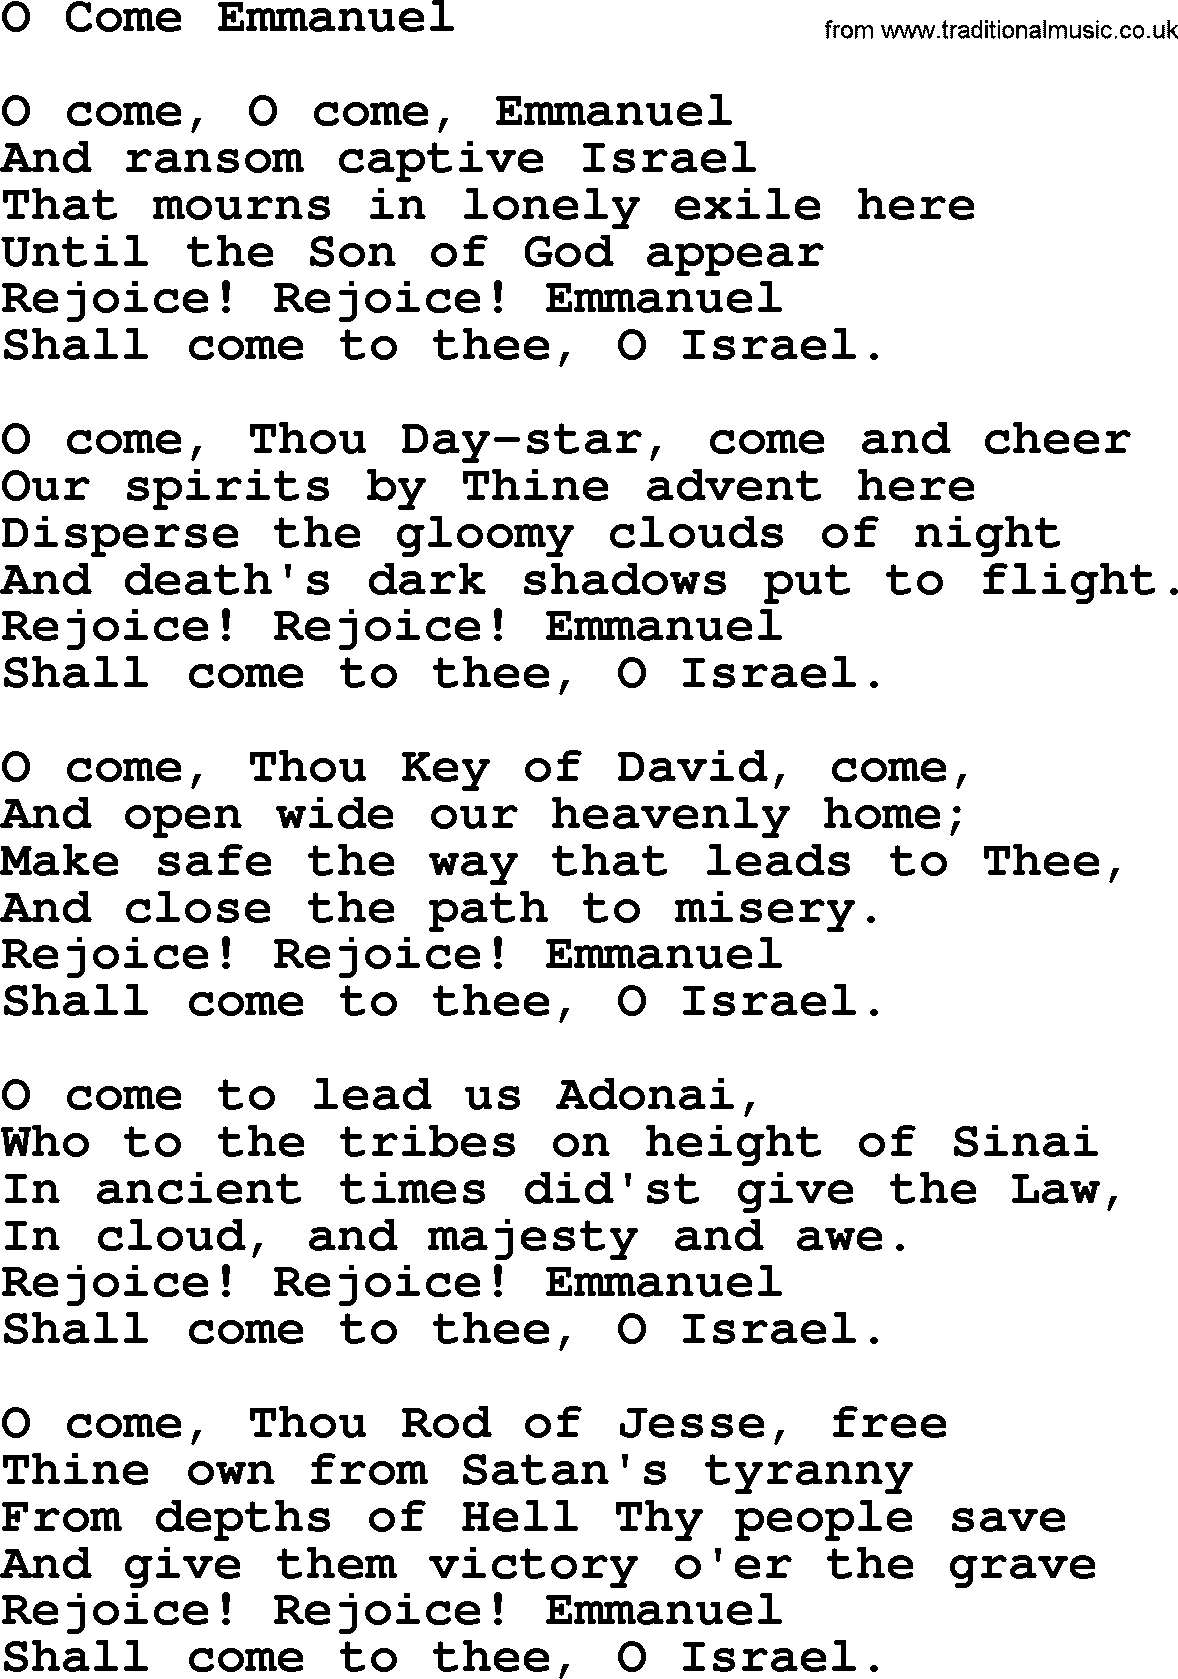 Catholic Hymn: O Come Emmanuel lyrics with PDF